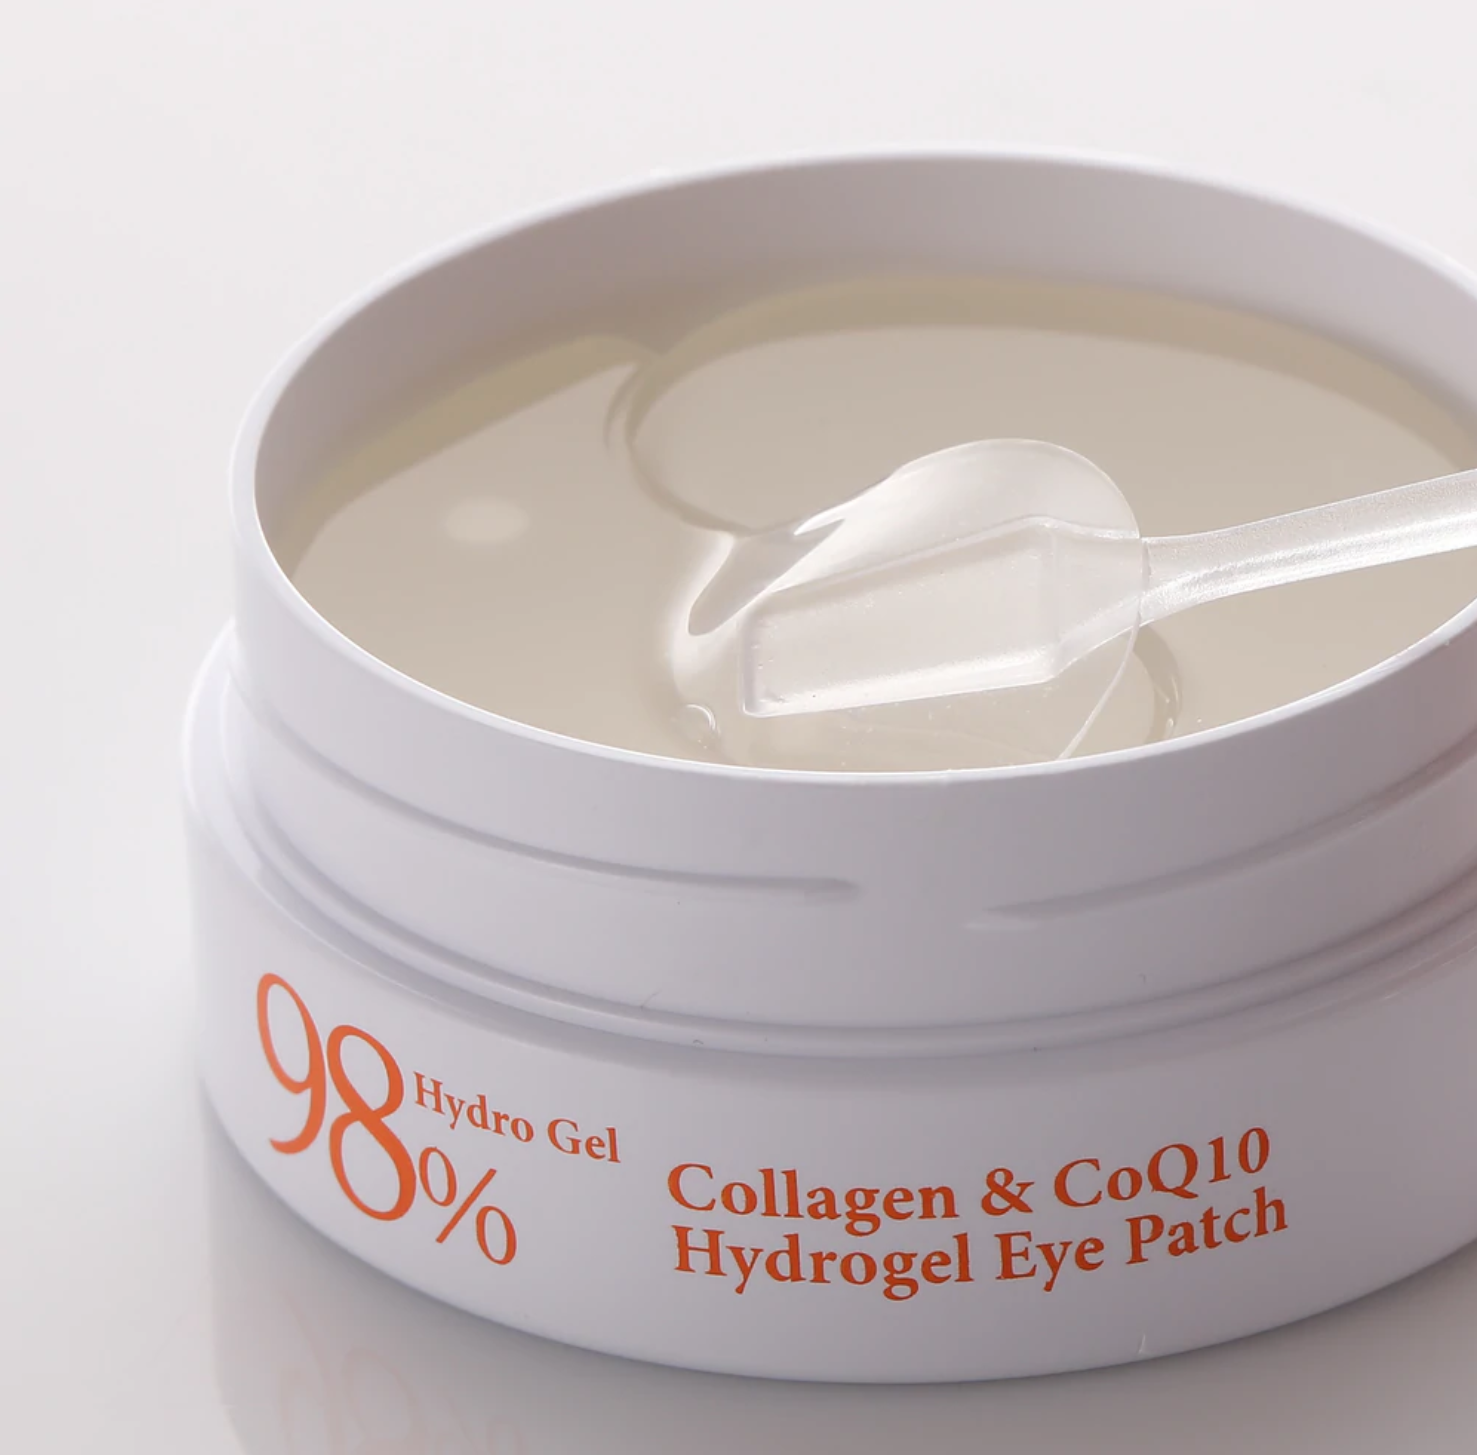 PETITFEE Collagen & CoQ10 Hydrogel Eye Patches 60pcs